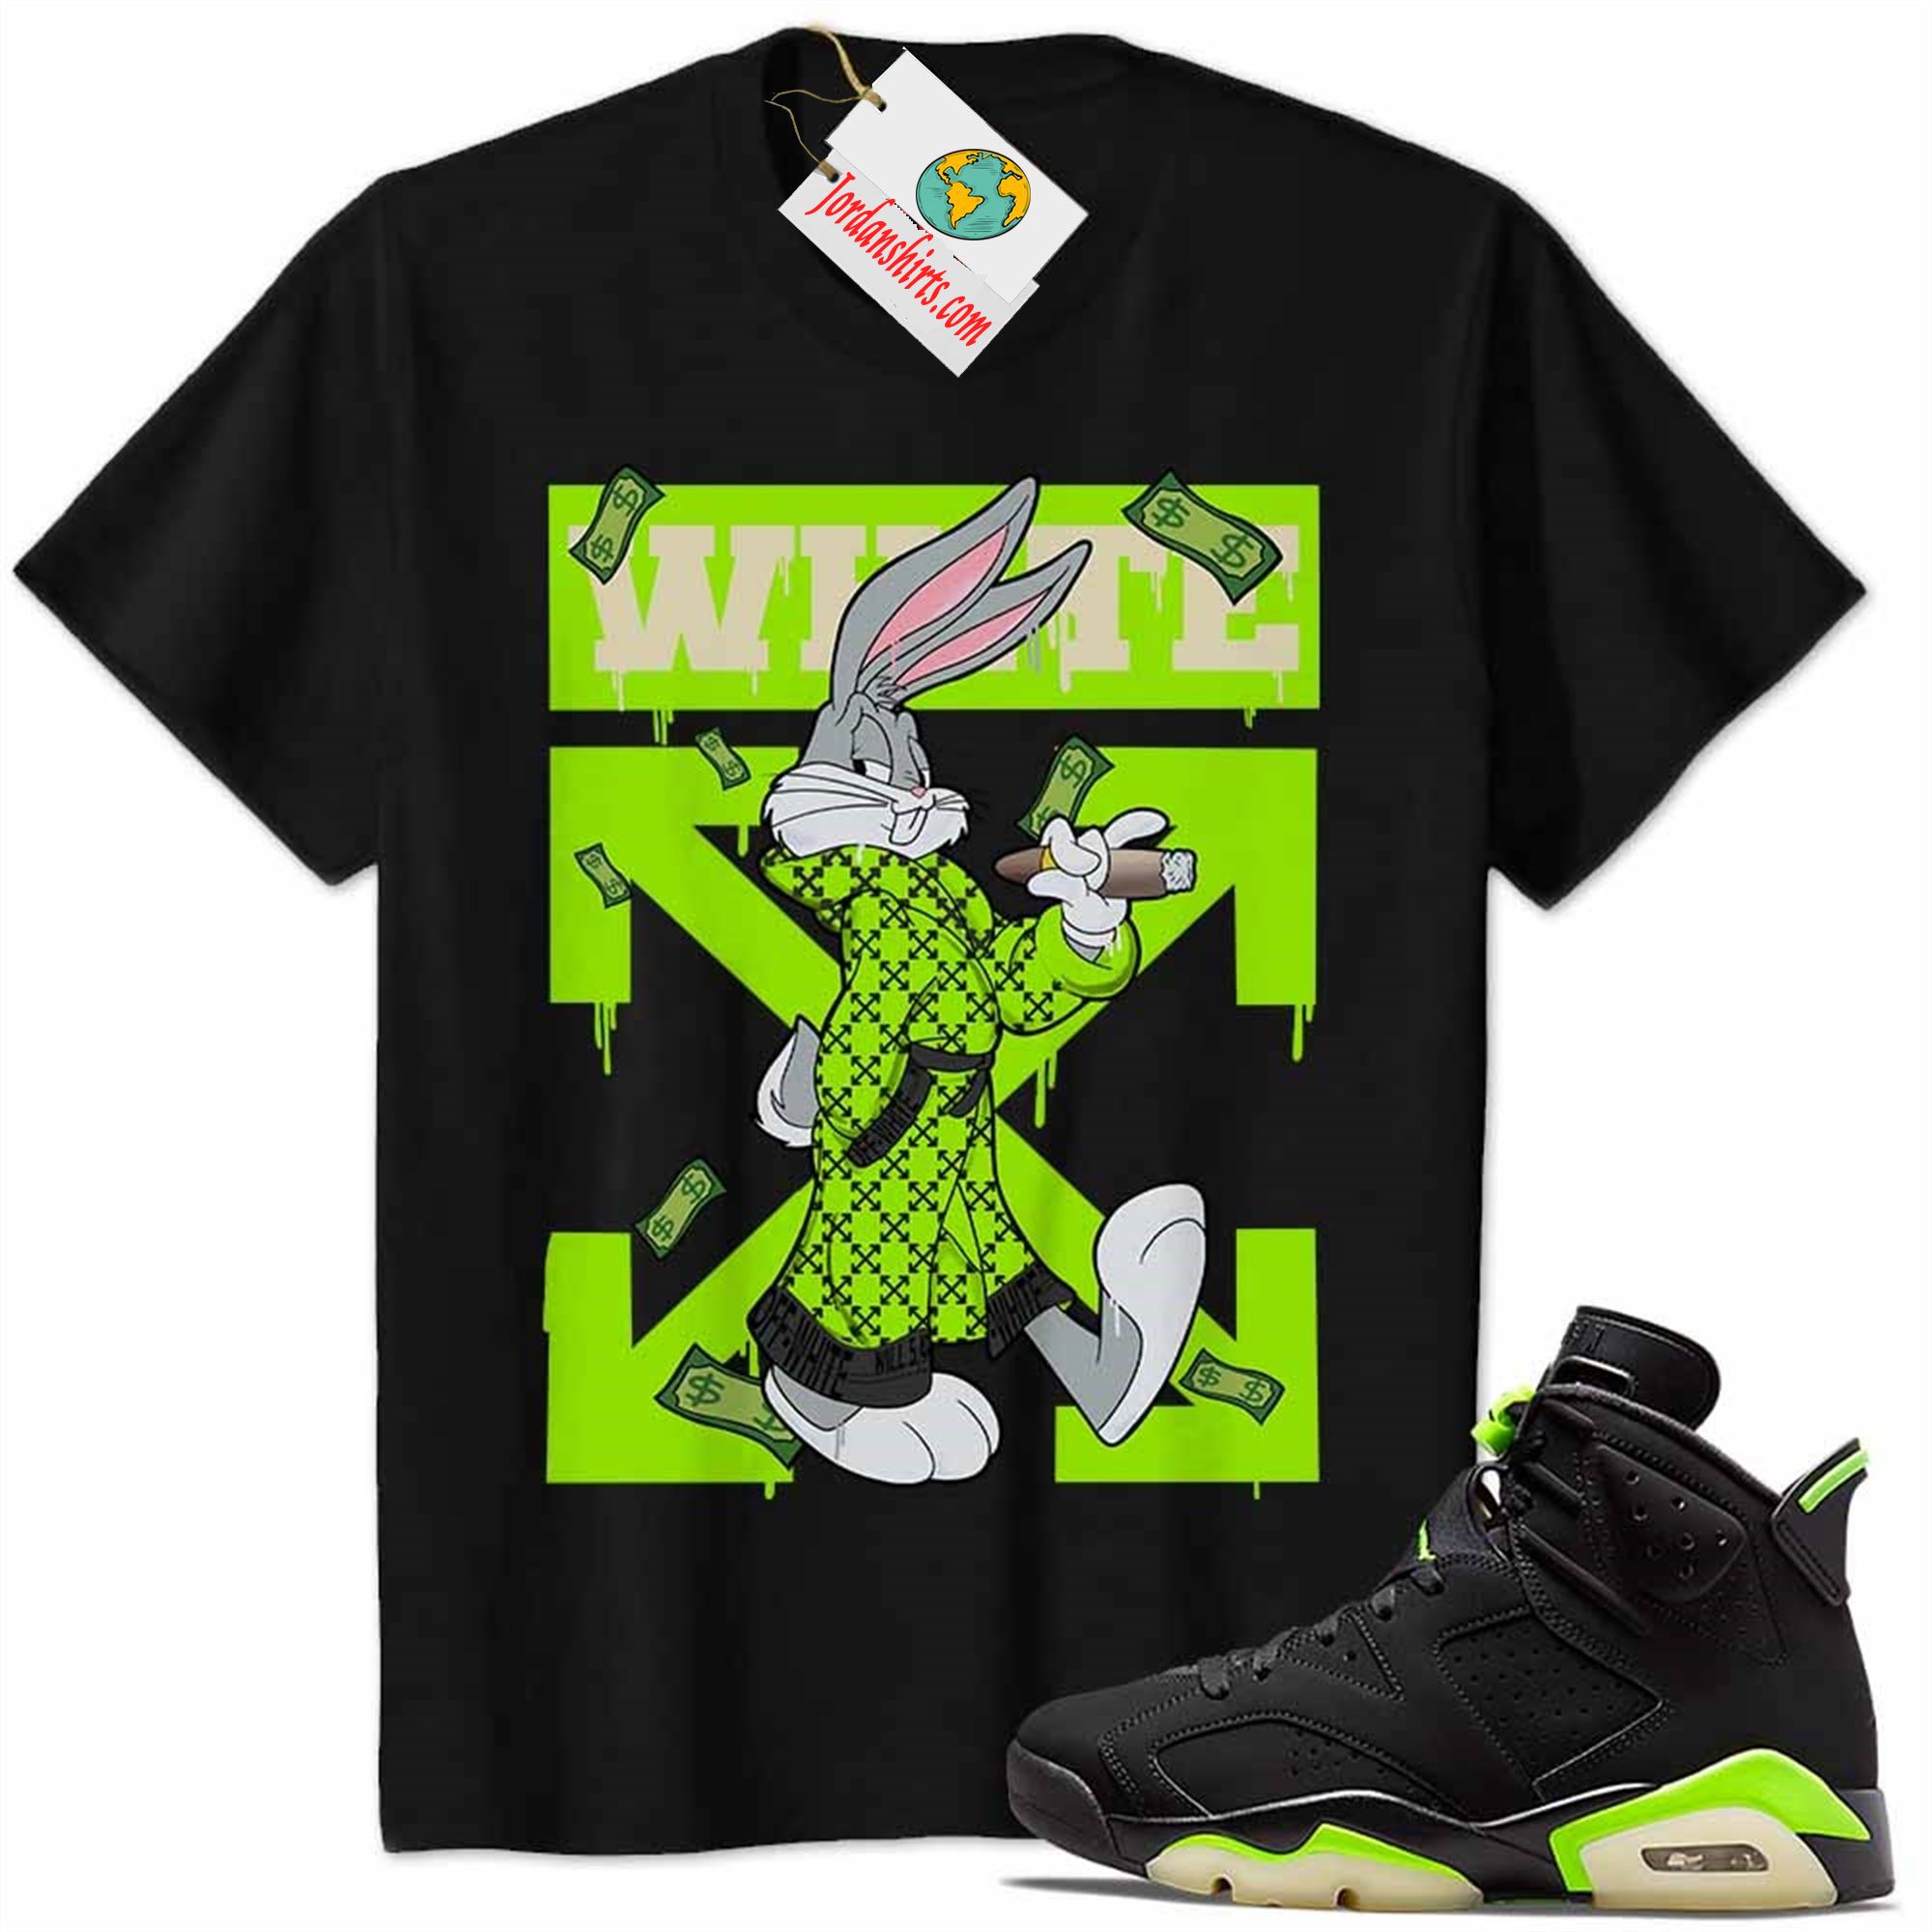 Jordan 6 Shirt, Jordan 6 Electric Green Shirt Bug Bunny Smokes Weed Money Falling Black Full Size Up To 5xl